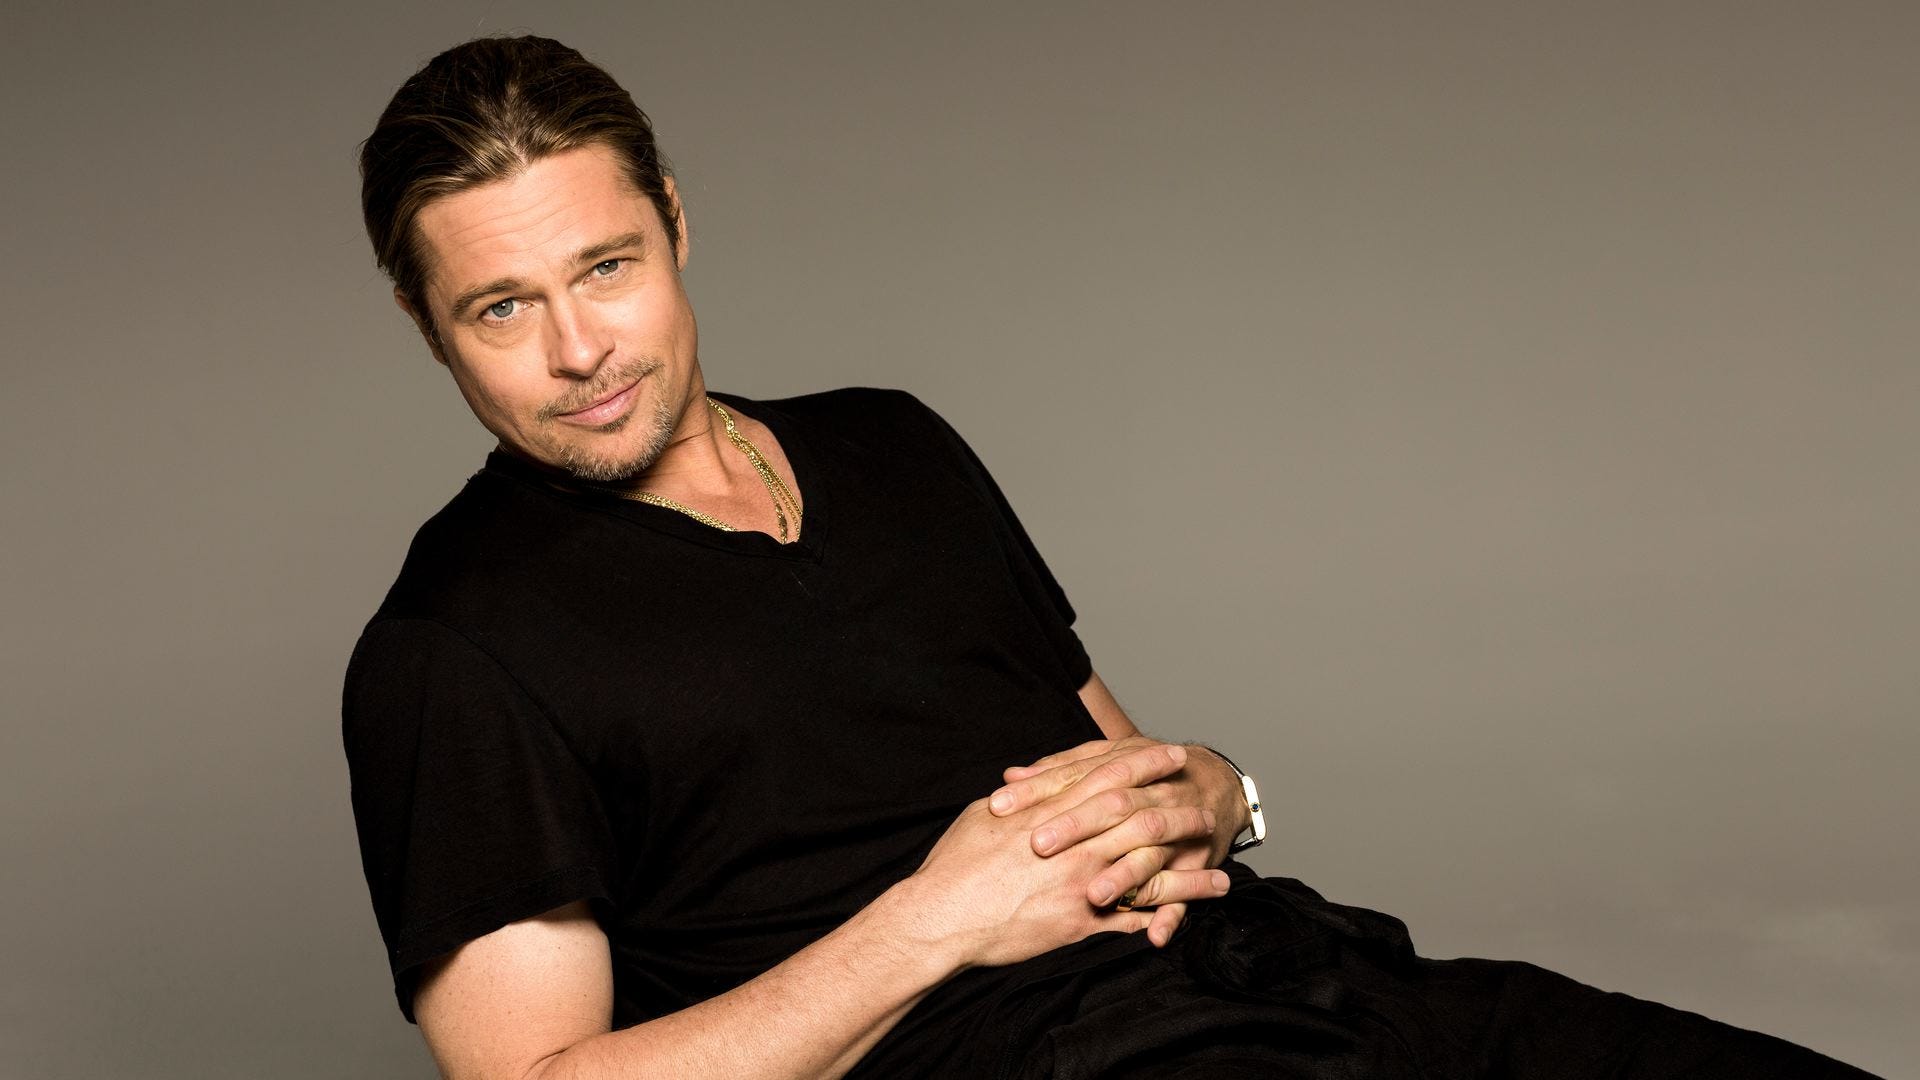 Brad Pitt's 50th birthday wax figure shows his age